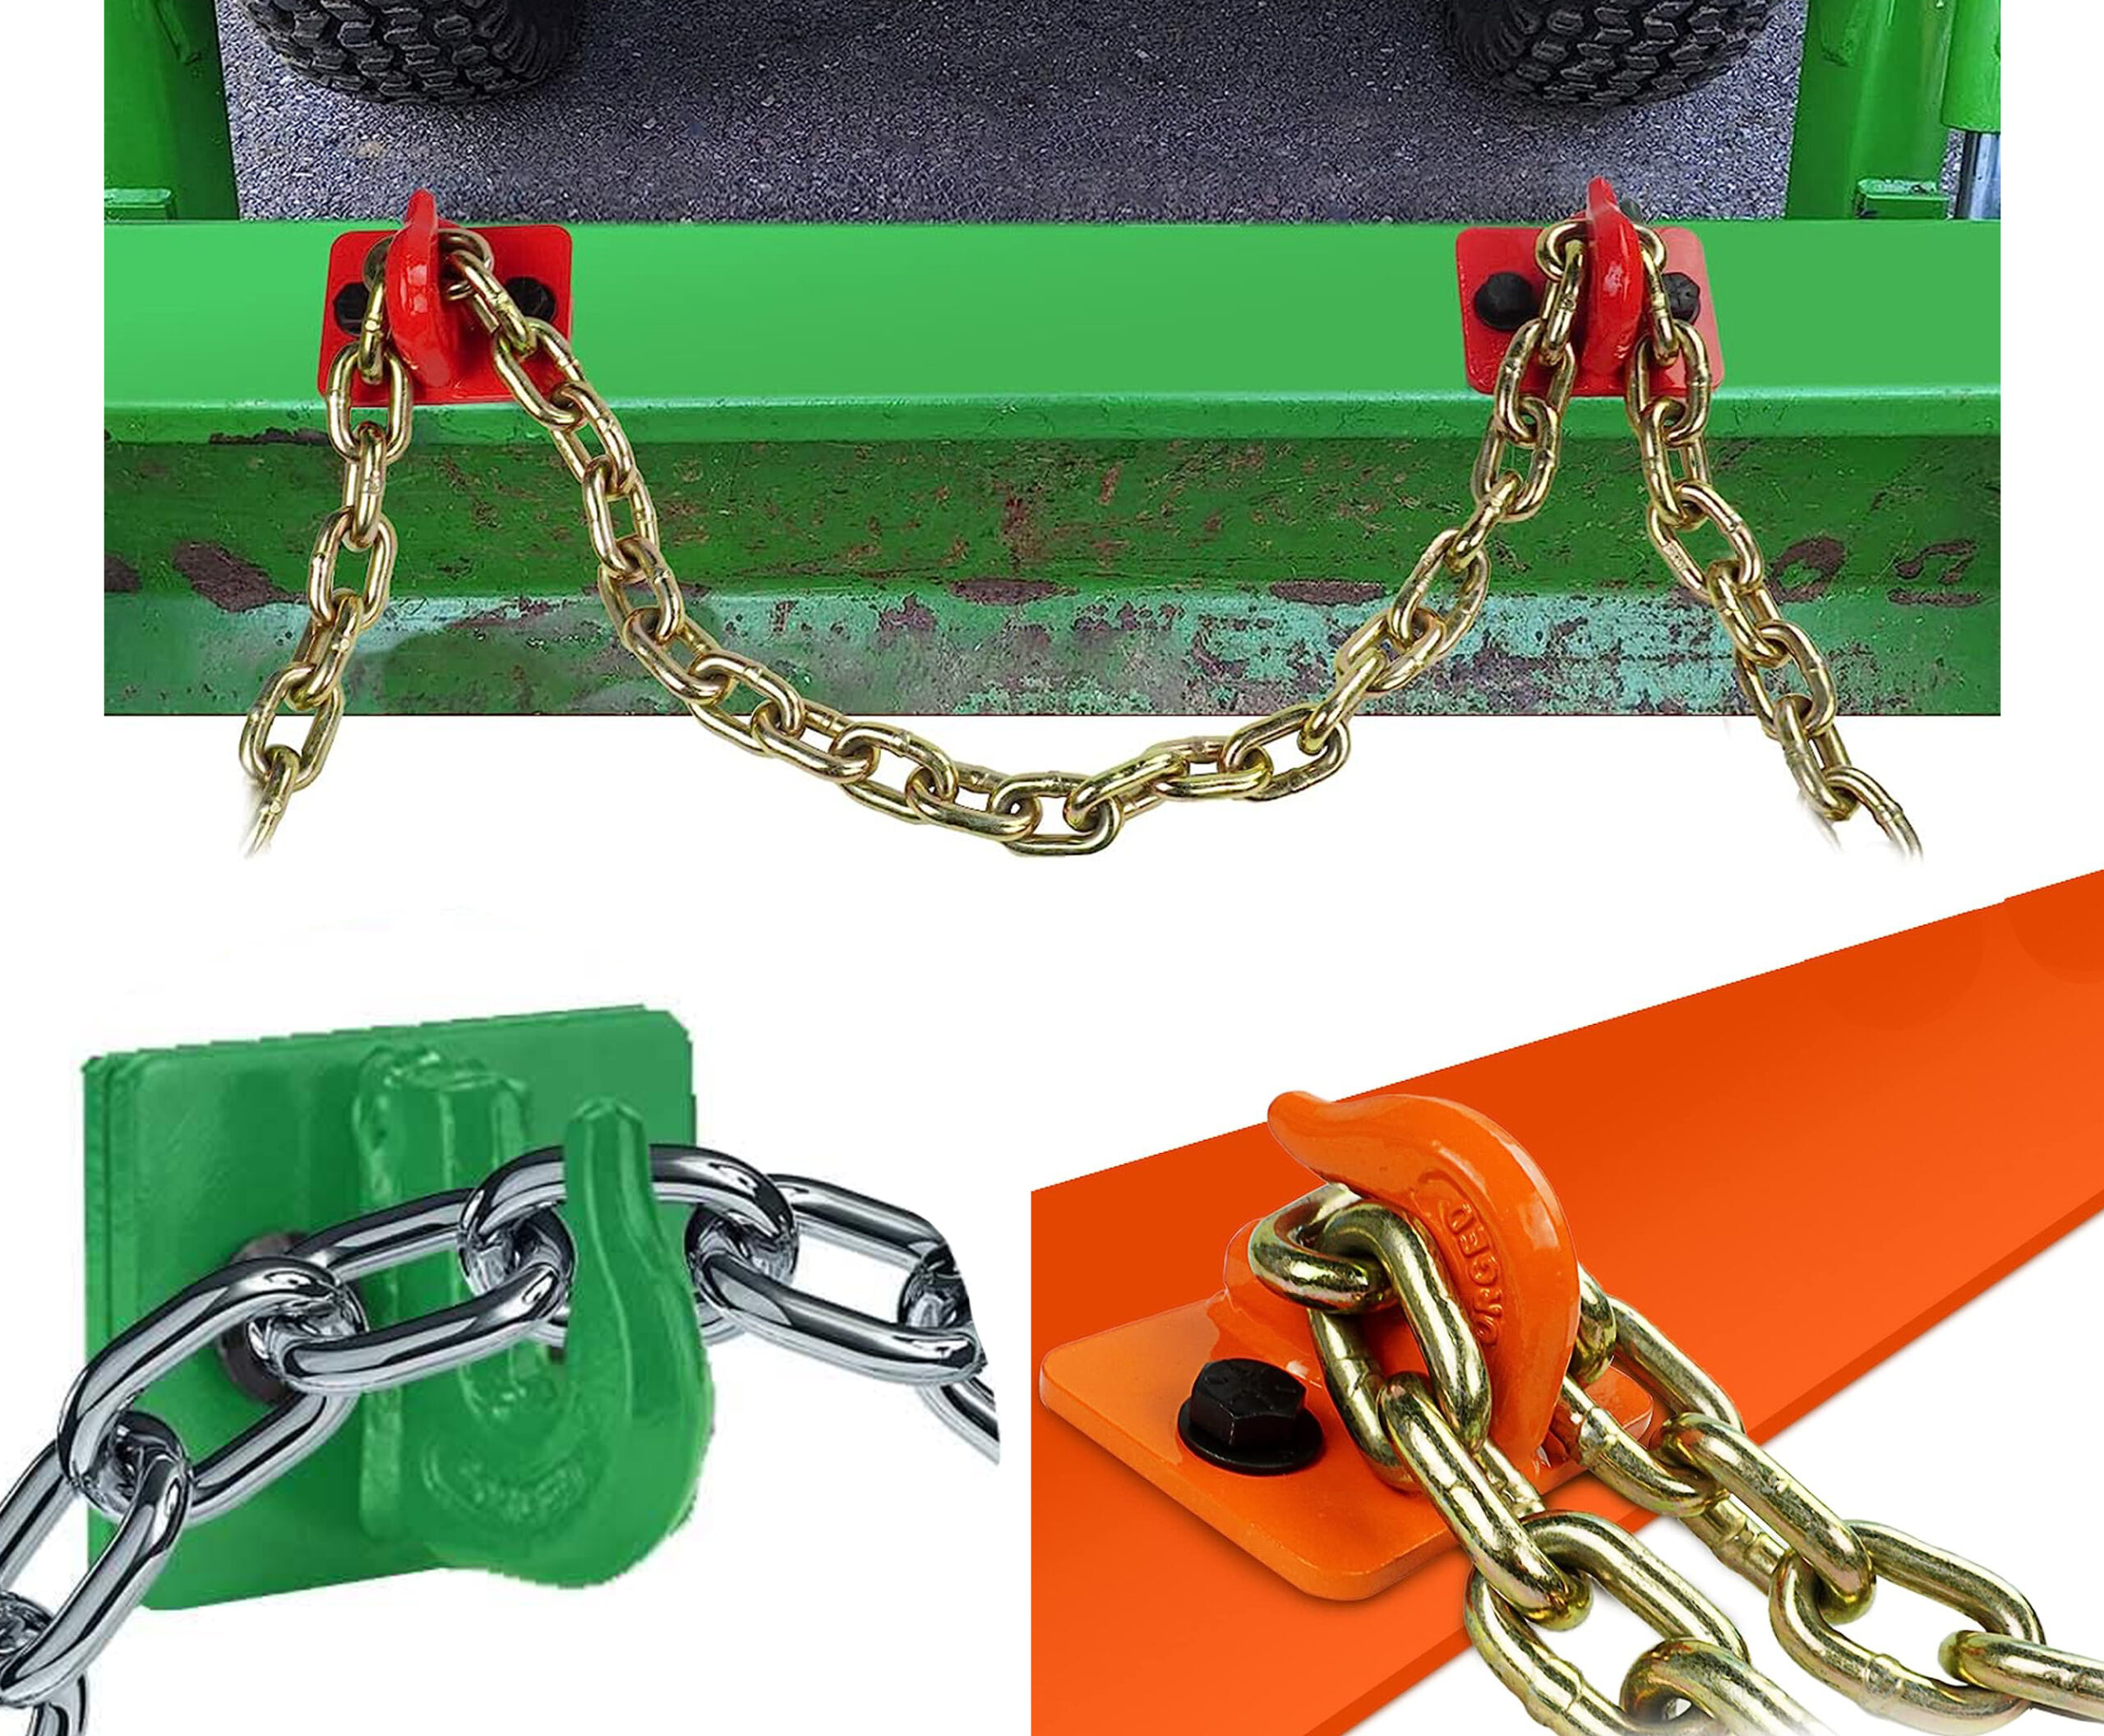 Tractor Bucket Hooks - Bolt On Hooks for Tractor Bucket - Heavy